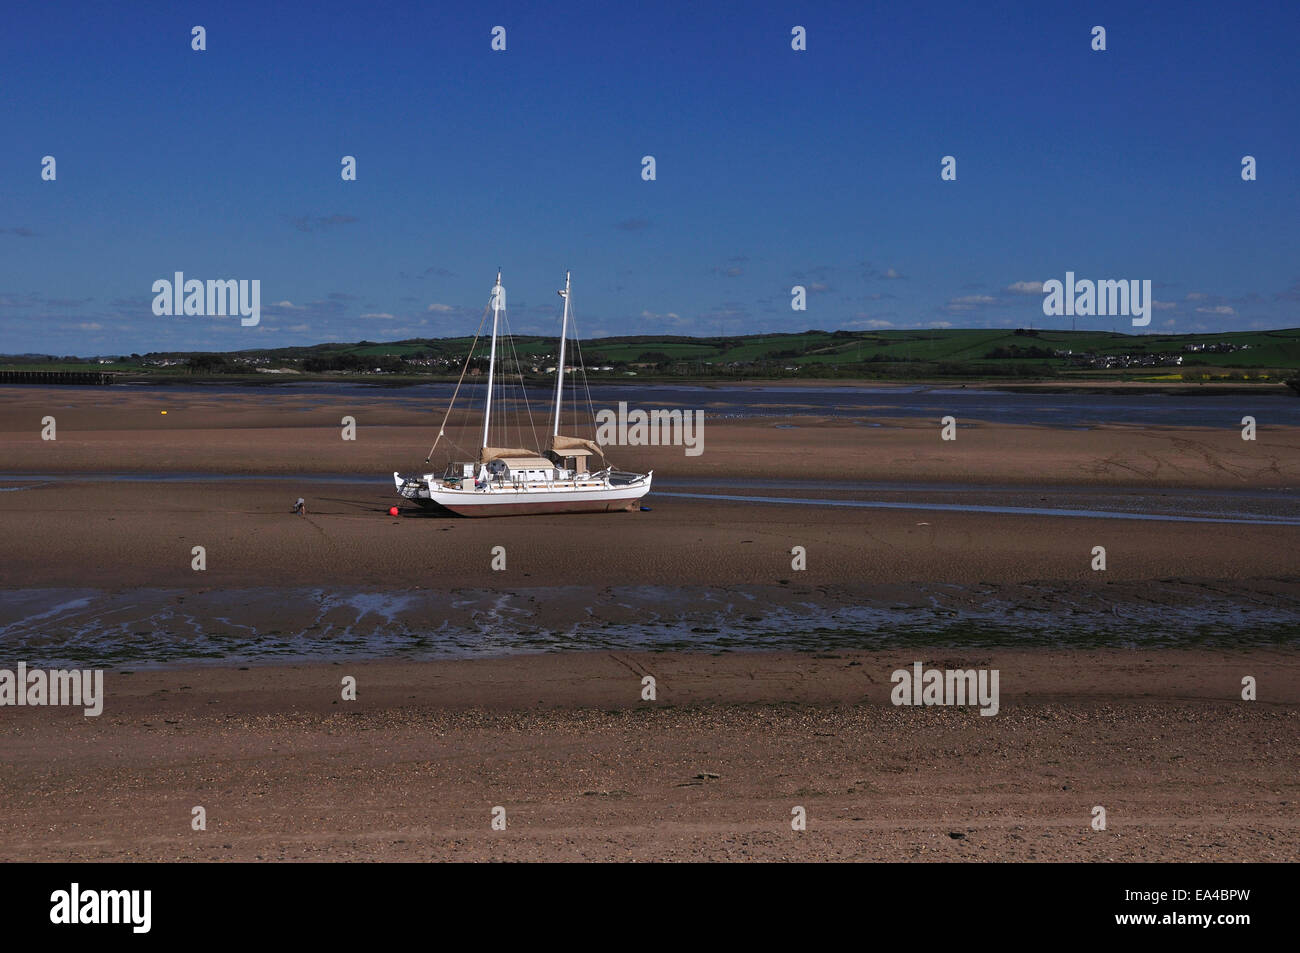 Un yate en el estuario Torridge en marea baja UK Foto de stock